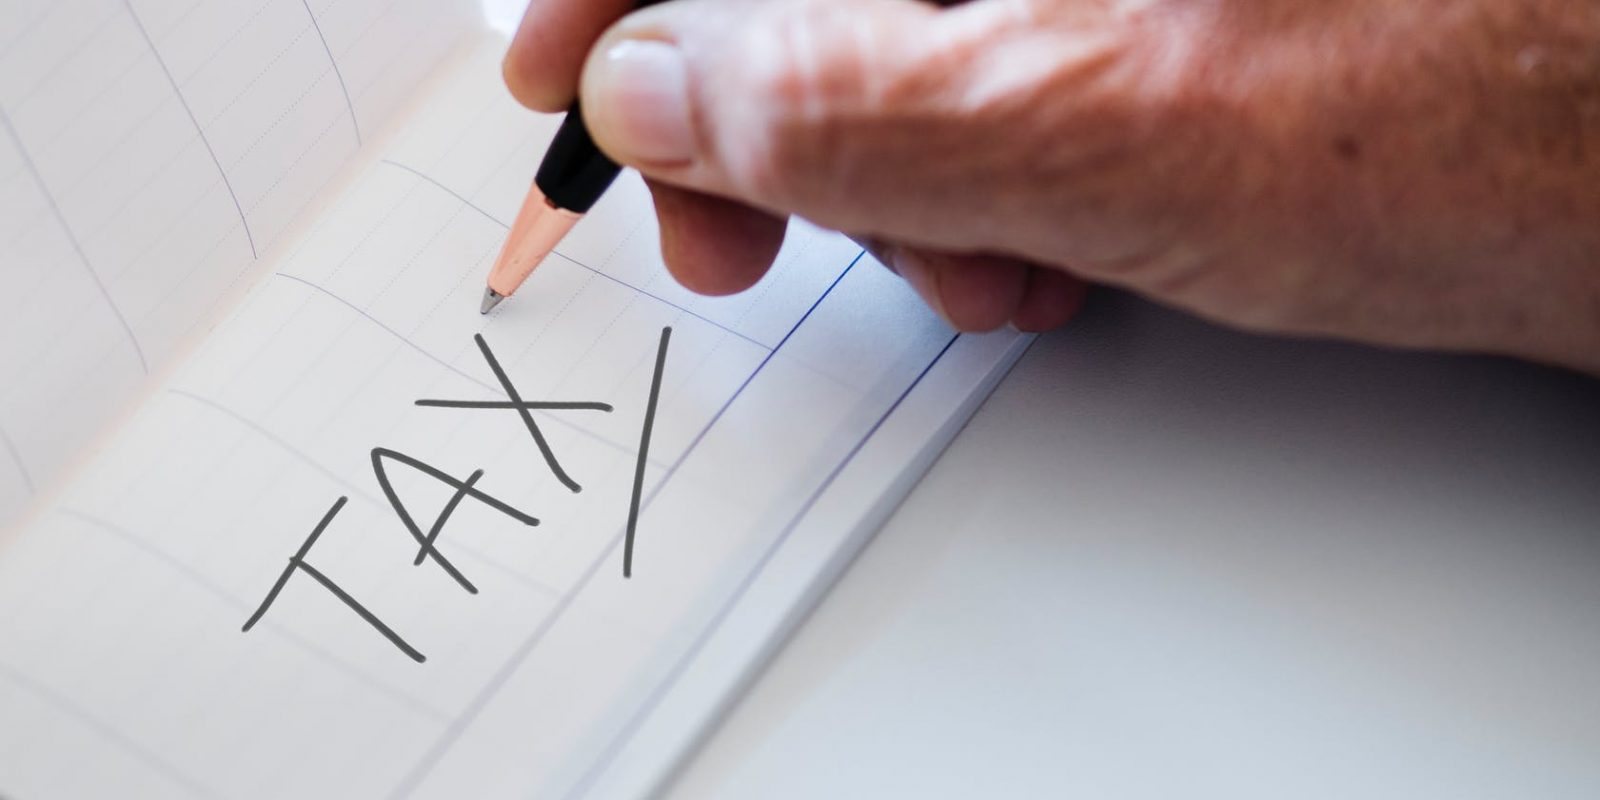 Tax Time – CRA Service Improvements